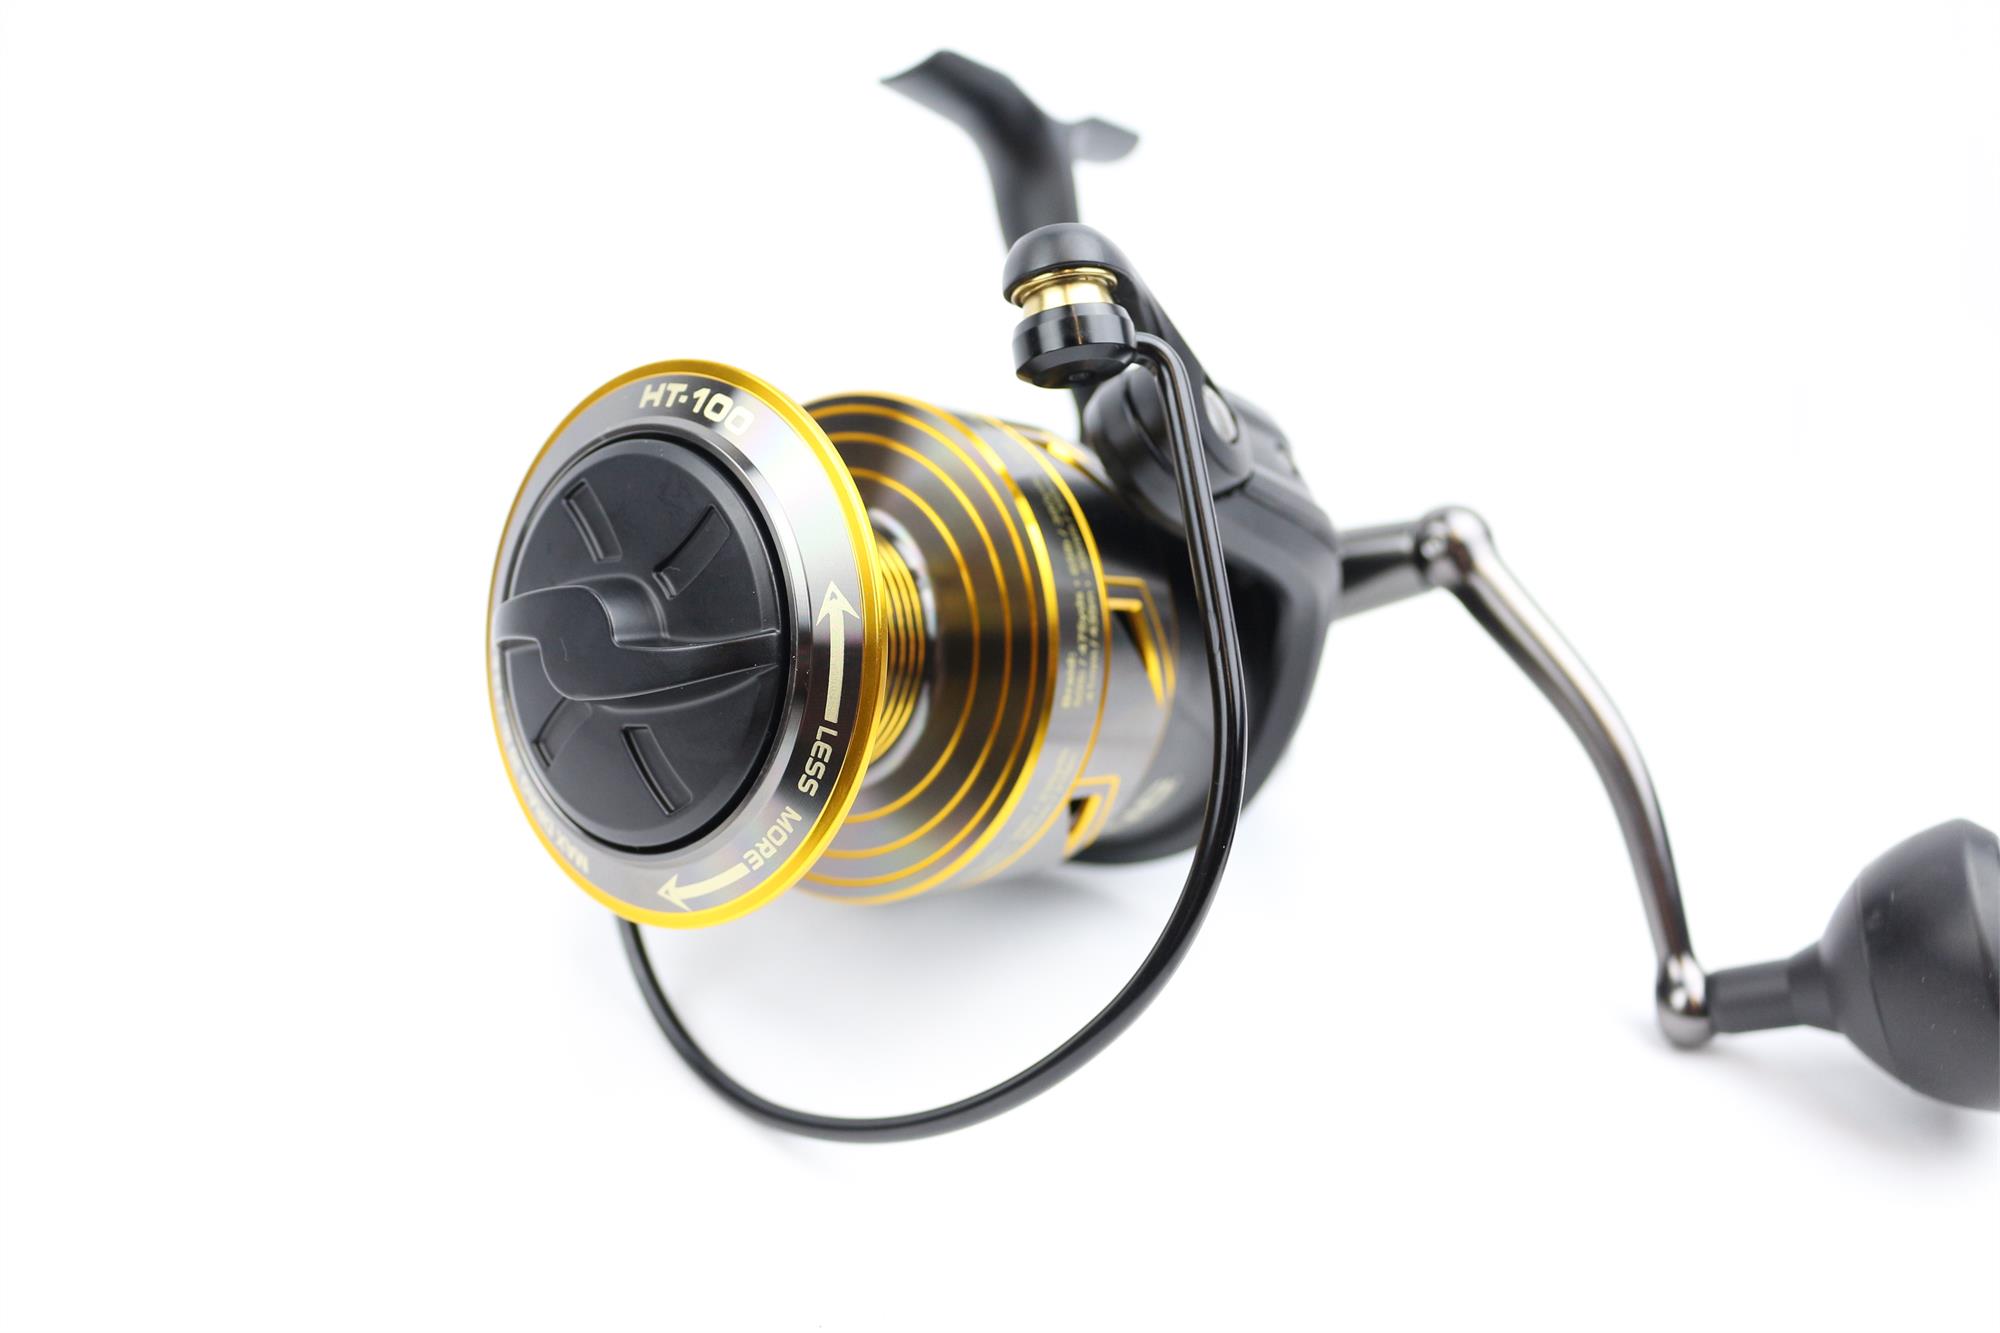 Penn Slammer IV 3500 / Heavy Duty Spinning Fishing Reel / Fixed Spool